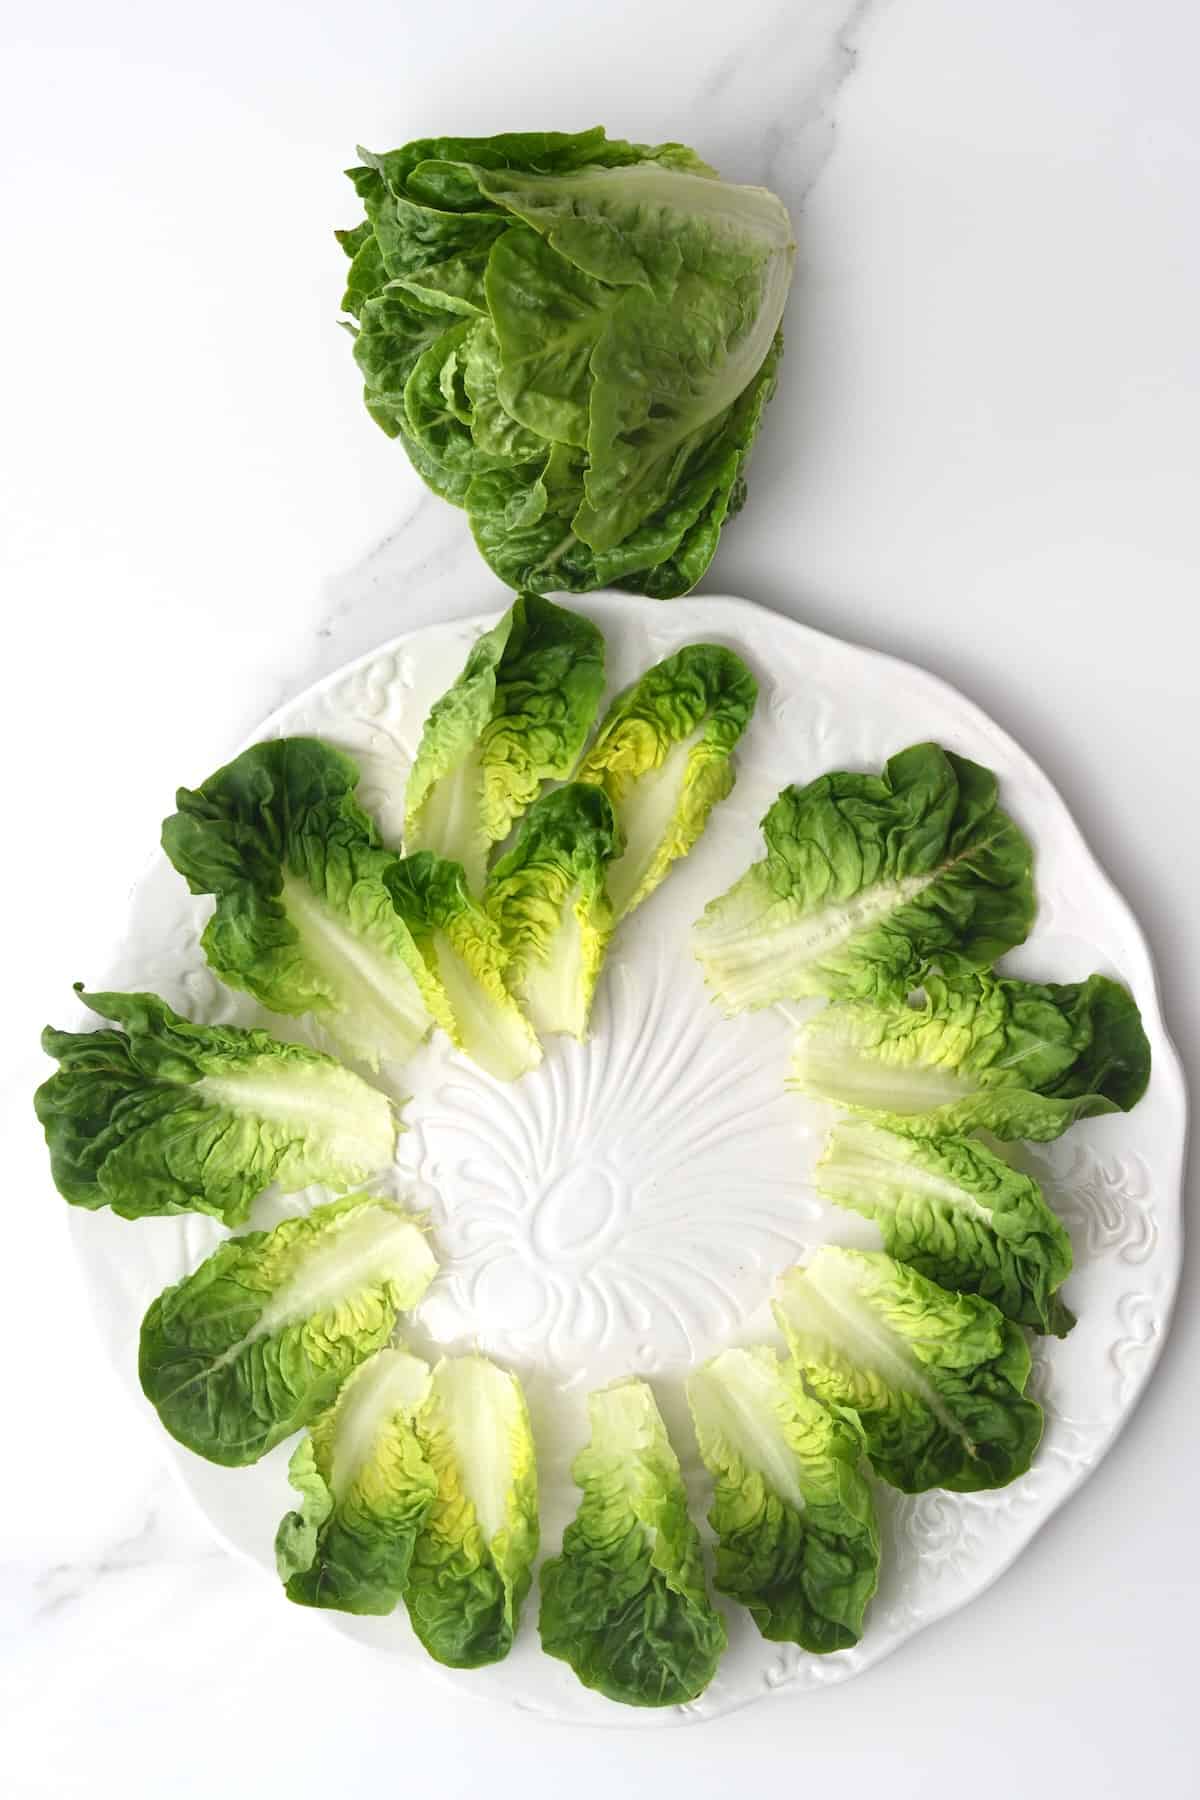 Arranging lettuce leaves on a plate